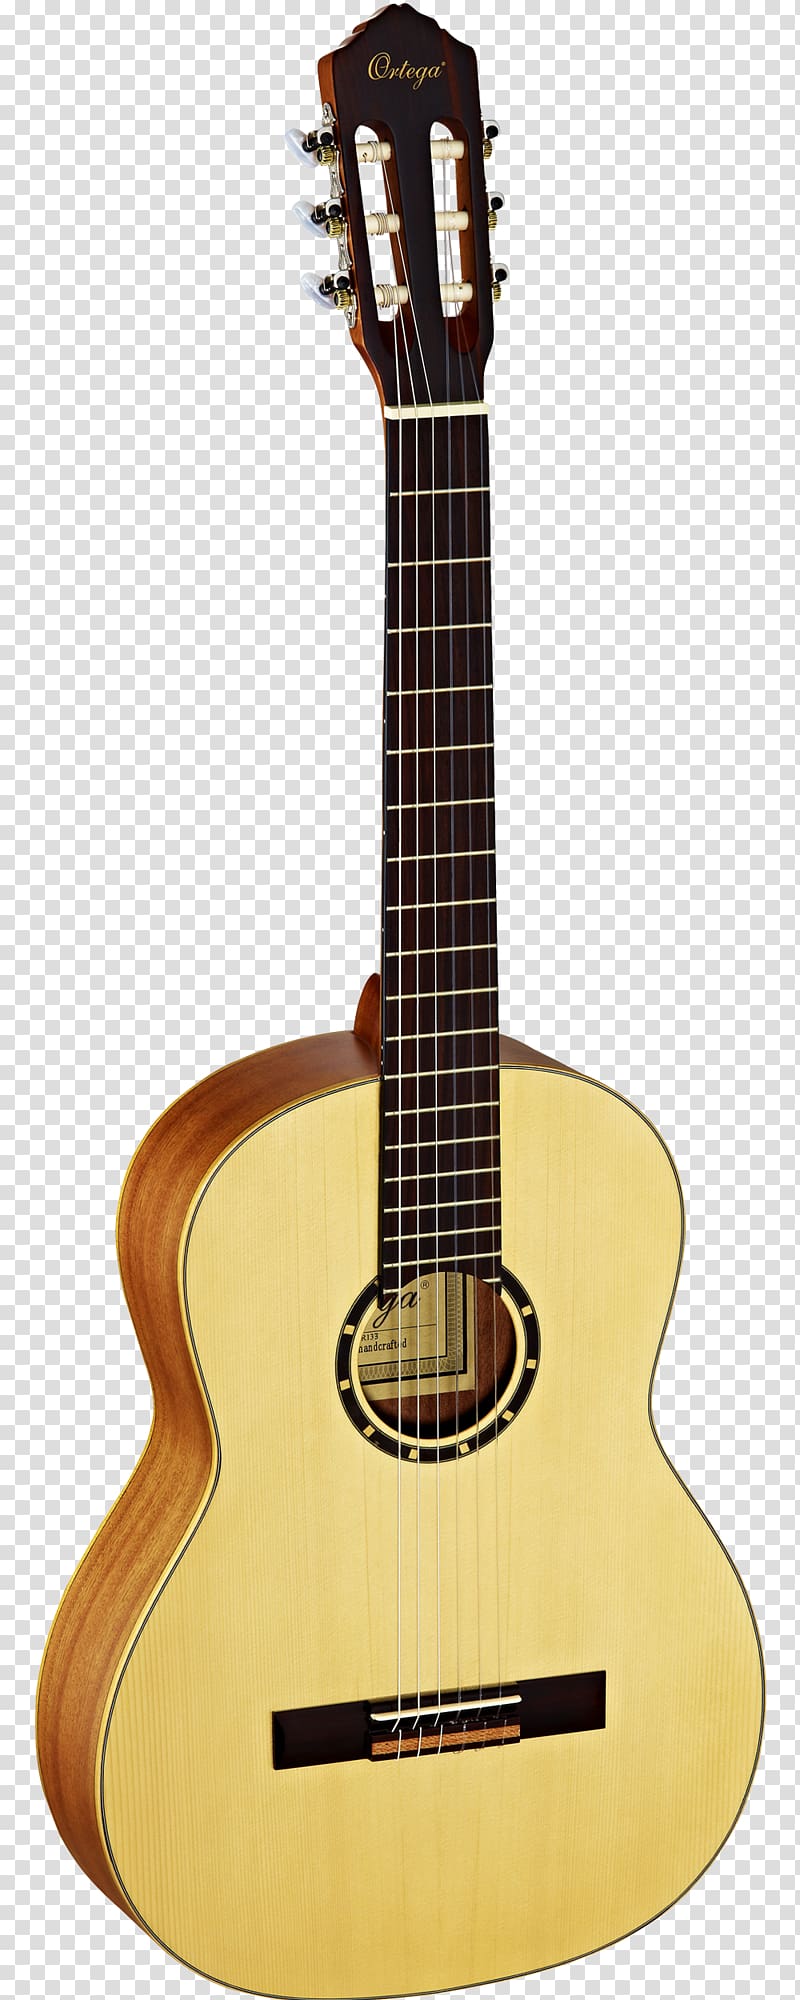 Ukulele Classical guitar Steel-string acoustic guitar, amancio ortega transparent background PNG clipart